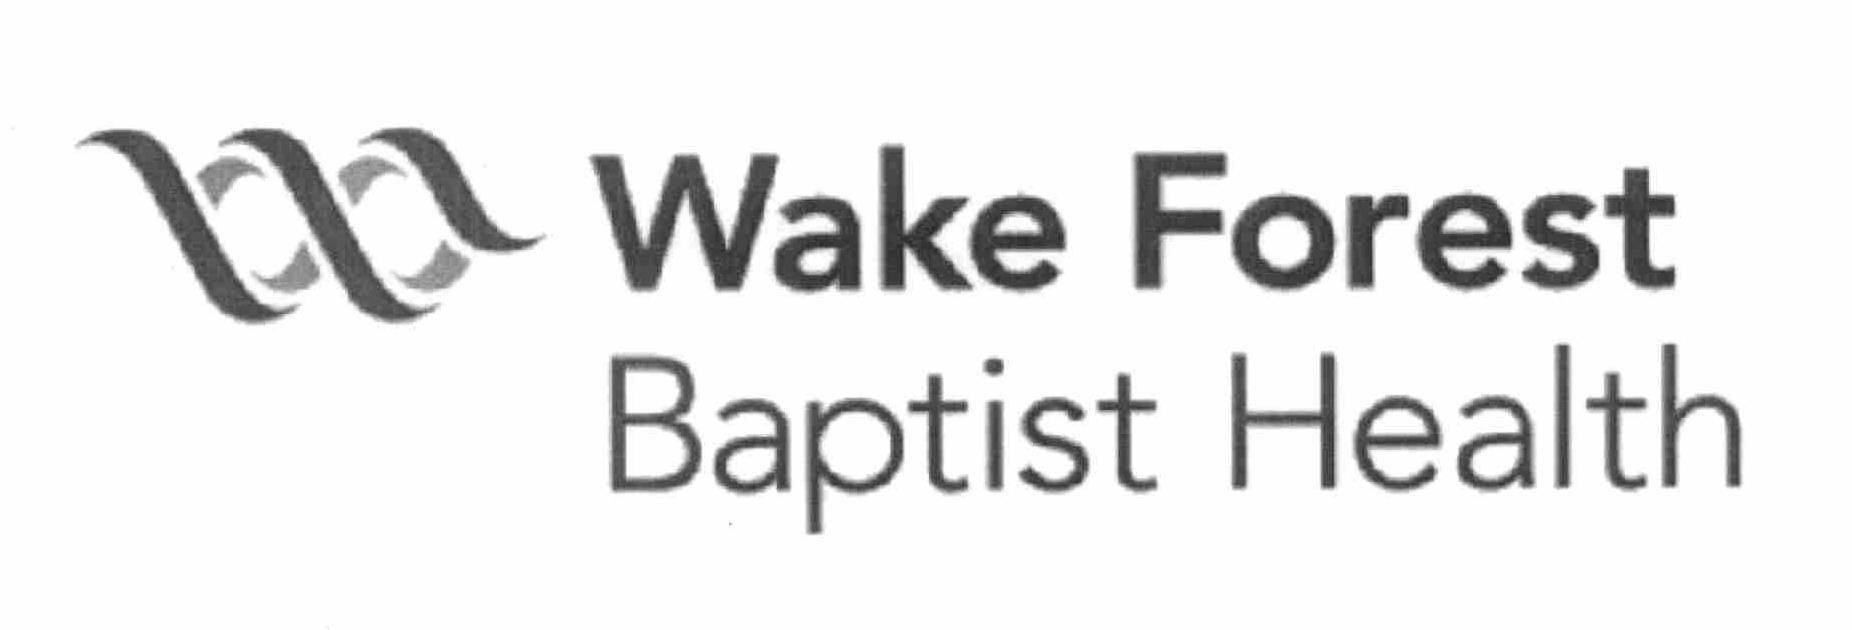  WAKE FOREST BAPTIST HEALTH